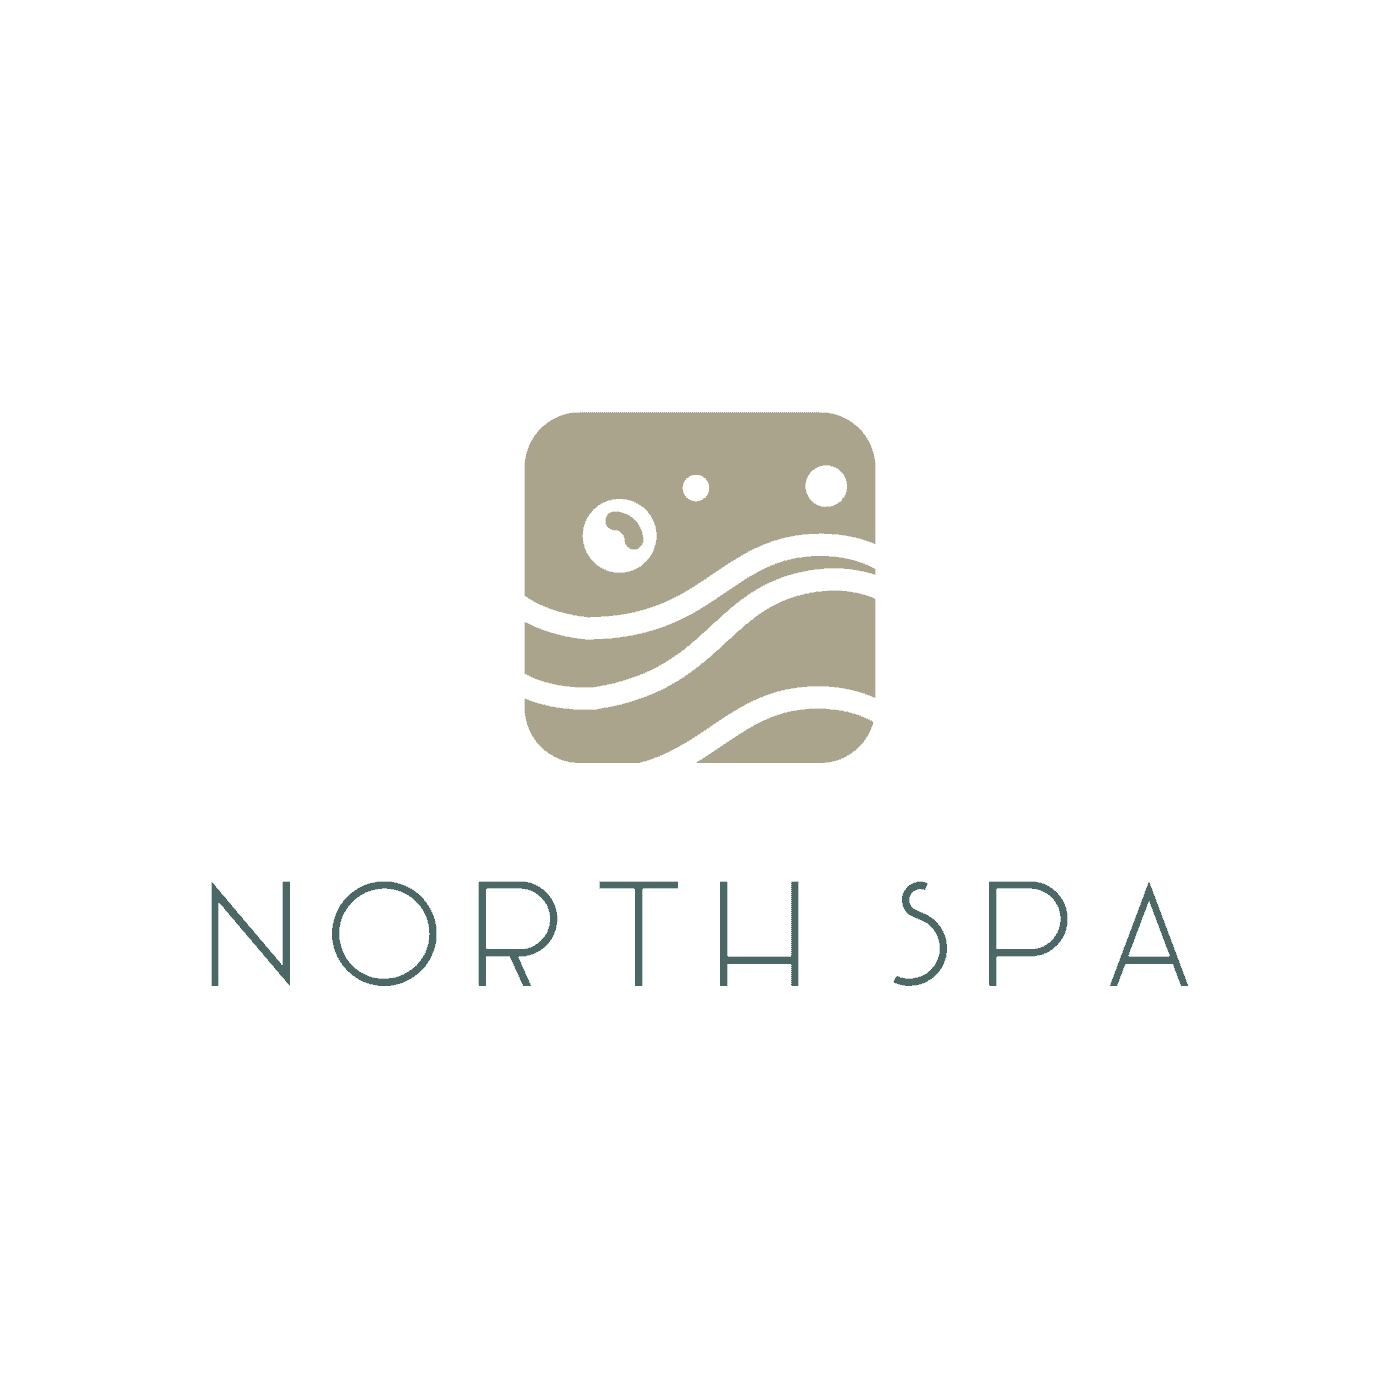 North Spa Logo